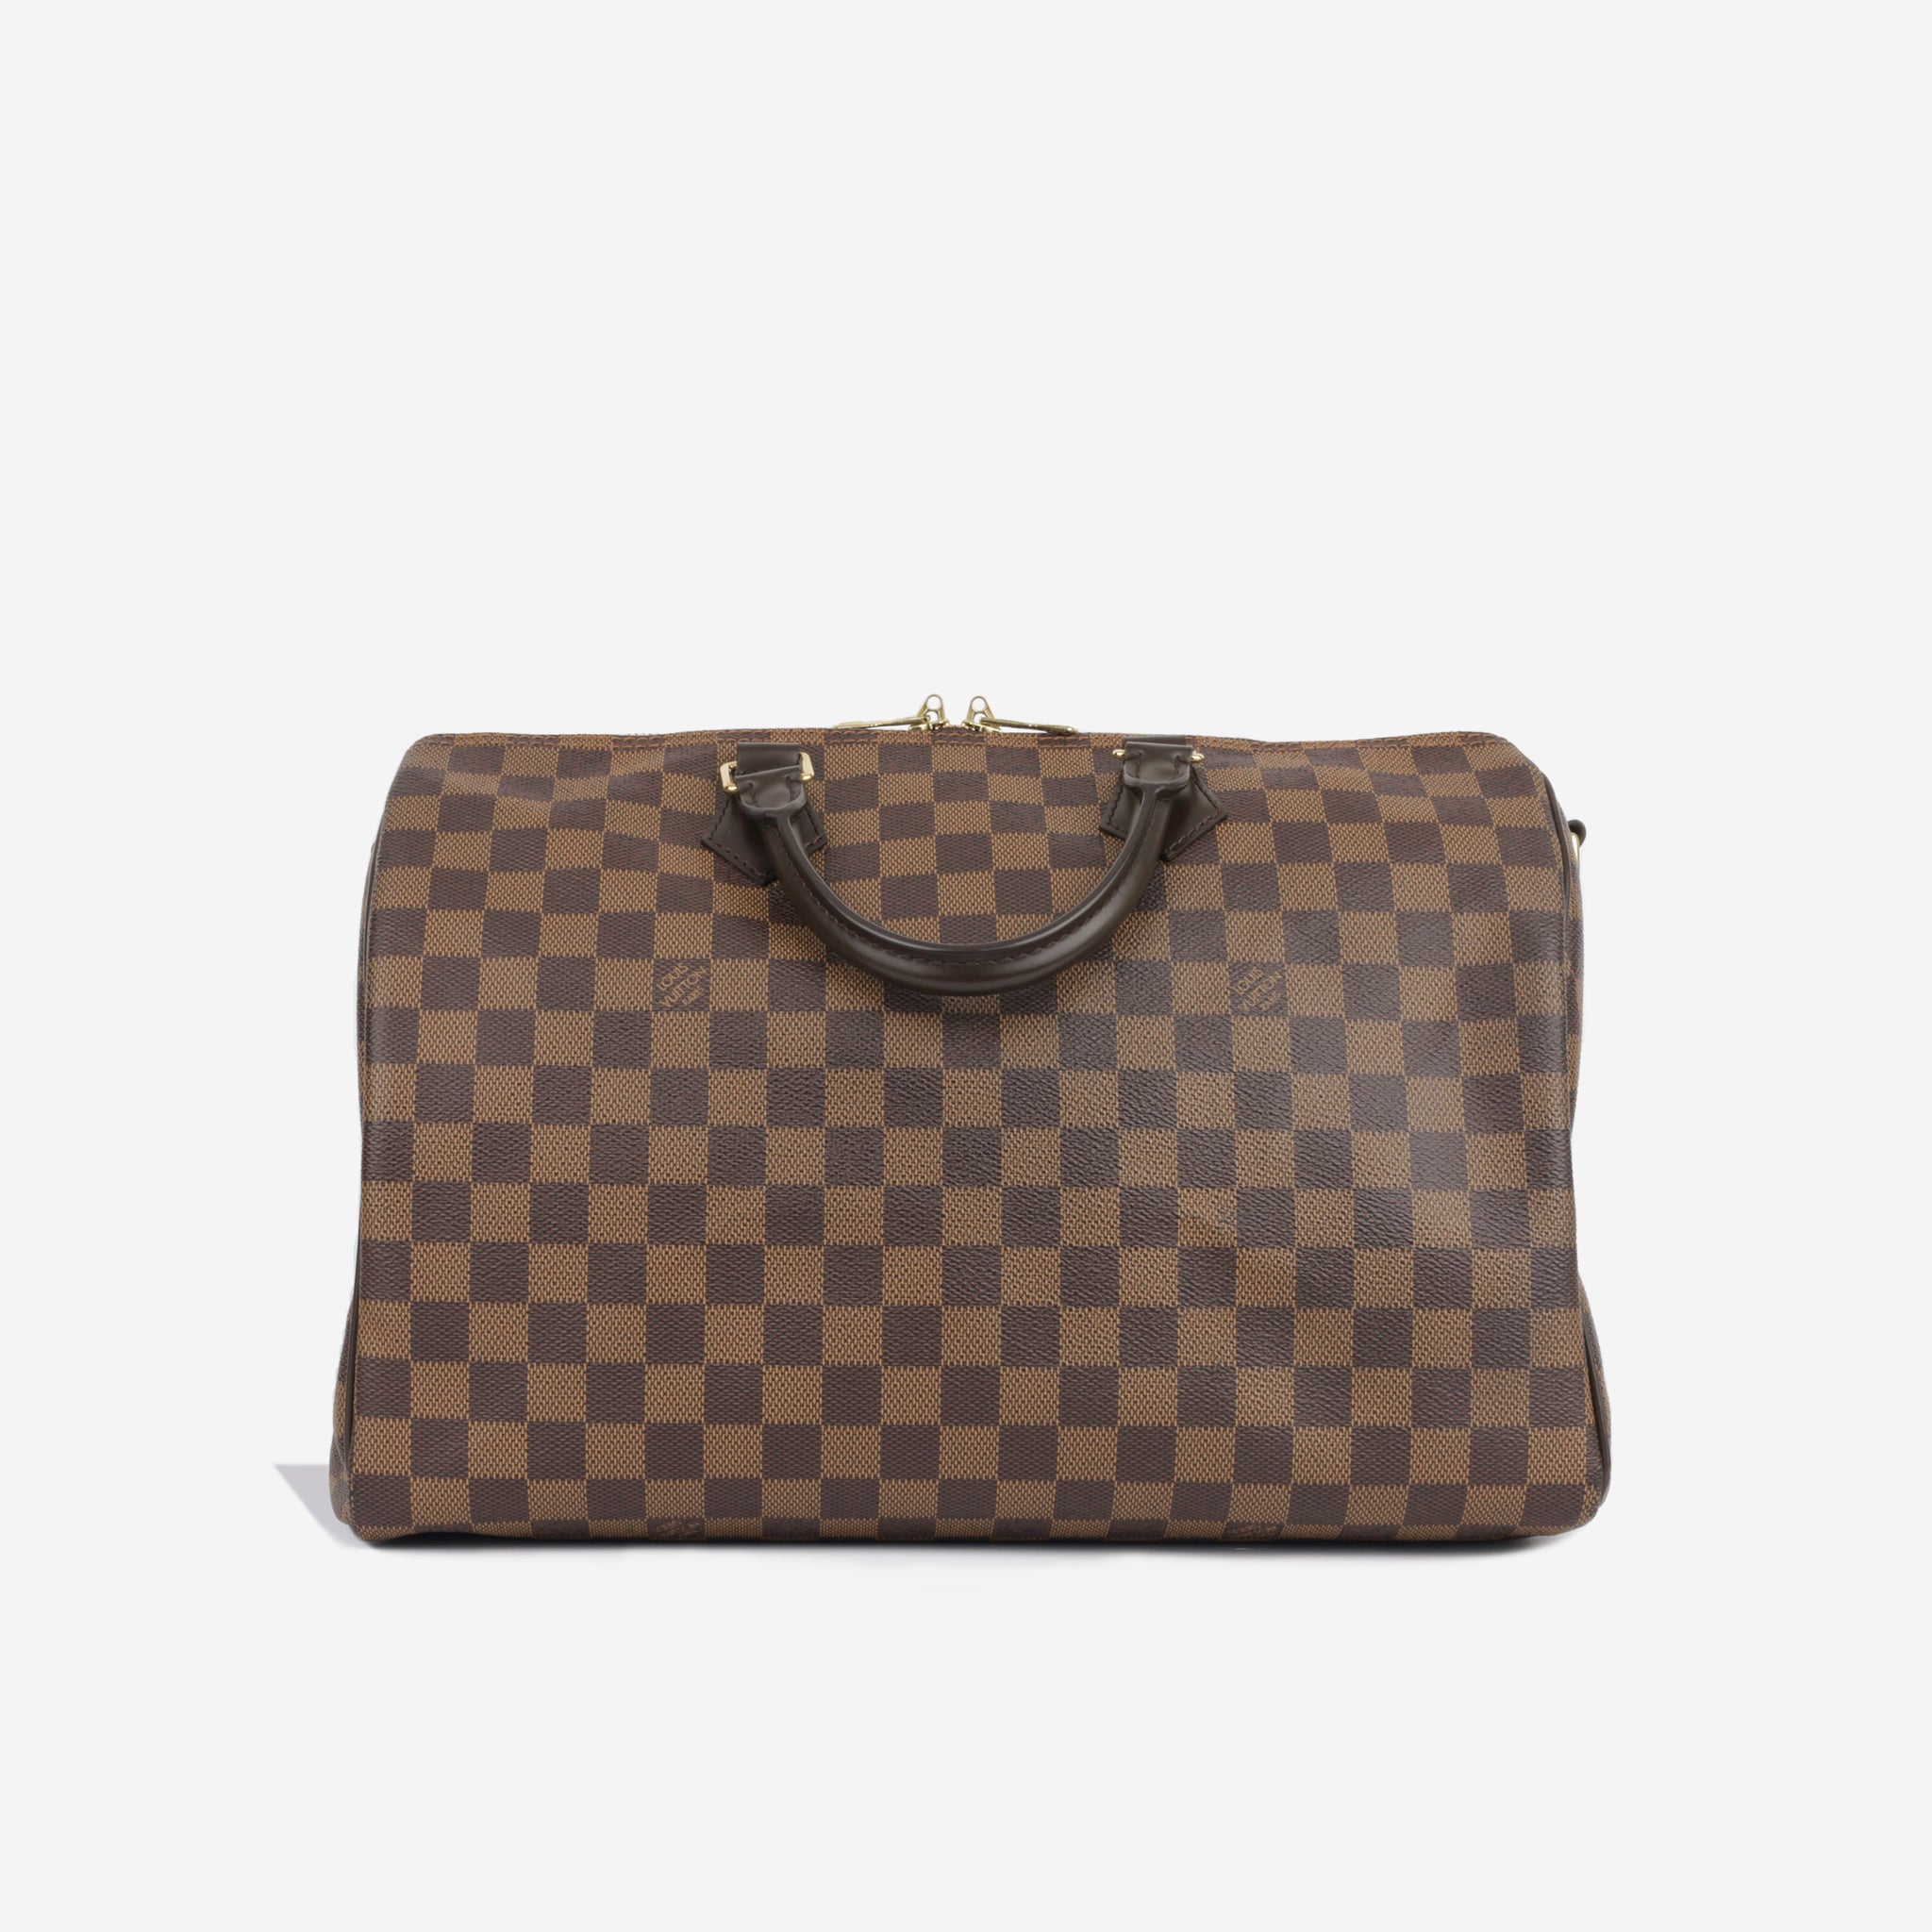 Louis Vuitton Damier Azur Canvas Speedy 35 Bag